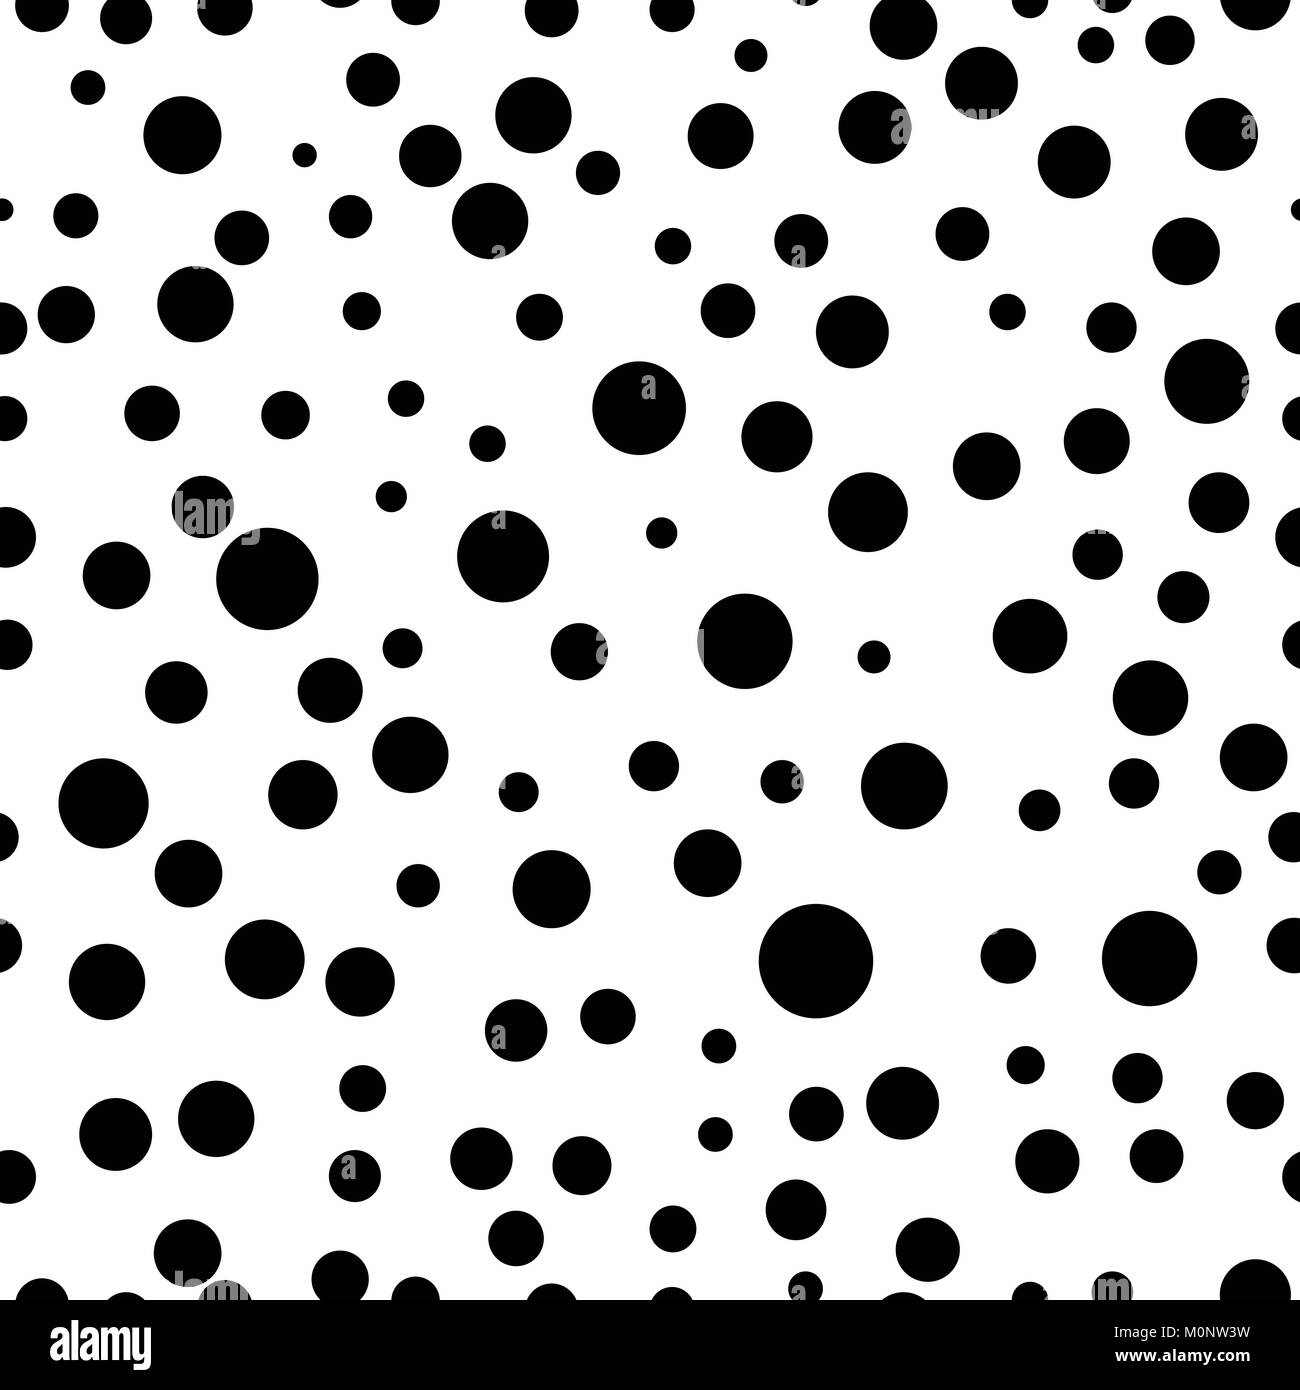 Polka dot Black and White Stock Photos & Images - Alamy